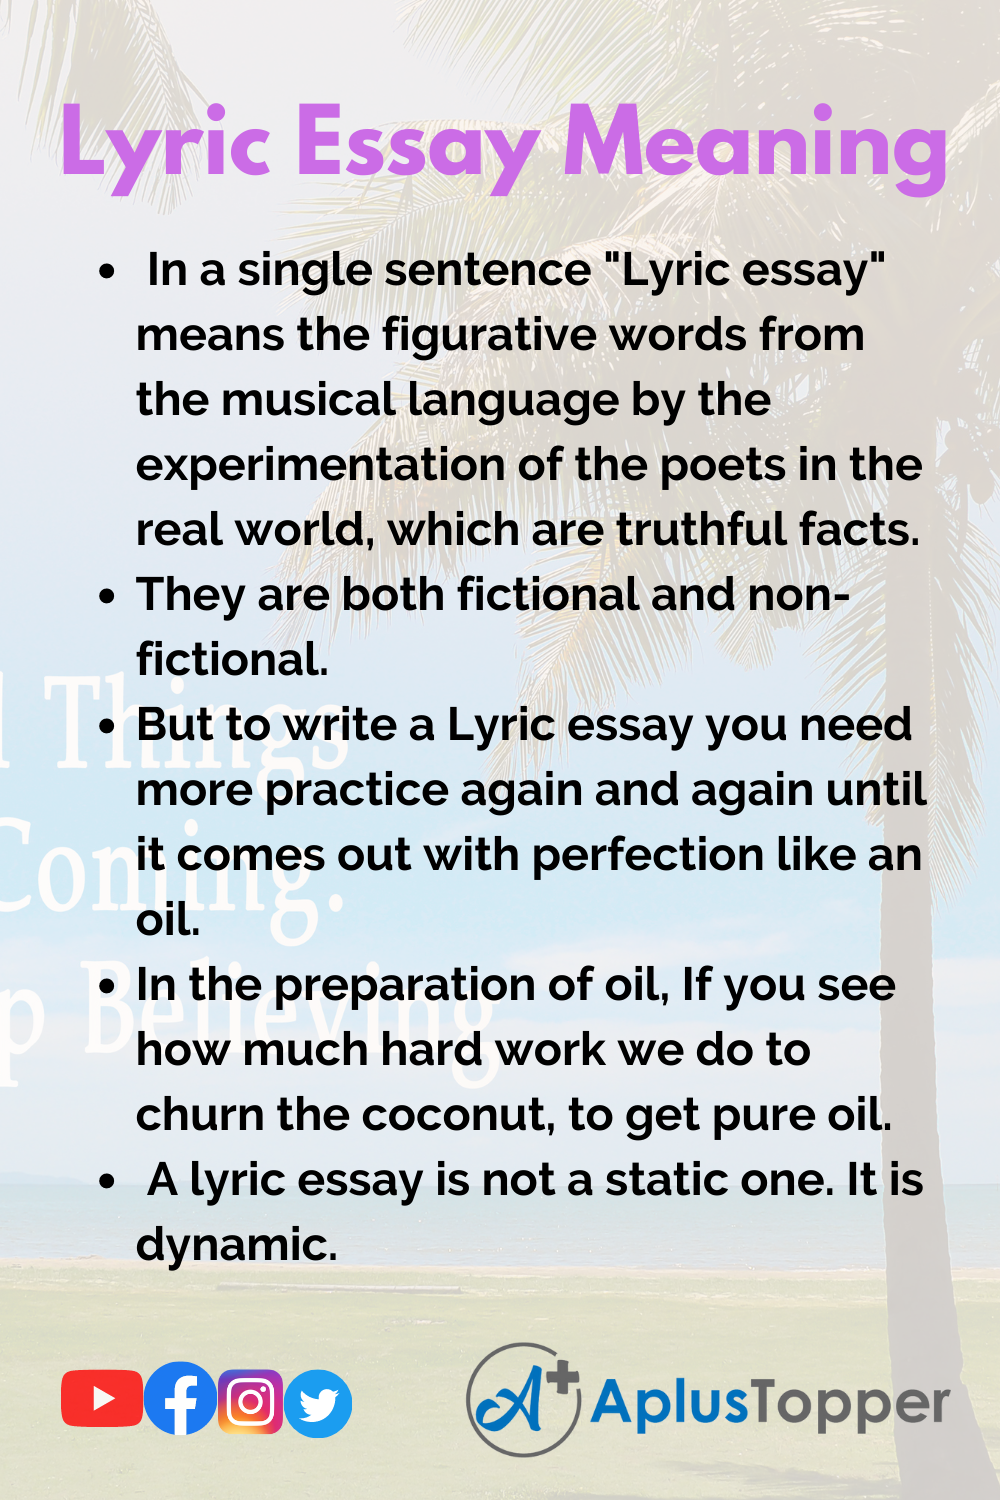 lyric-essay-essay-on-lyric-for-lyrics-writers-a-plus-topper